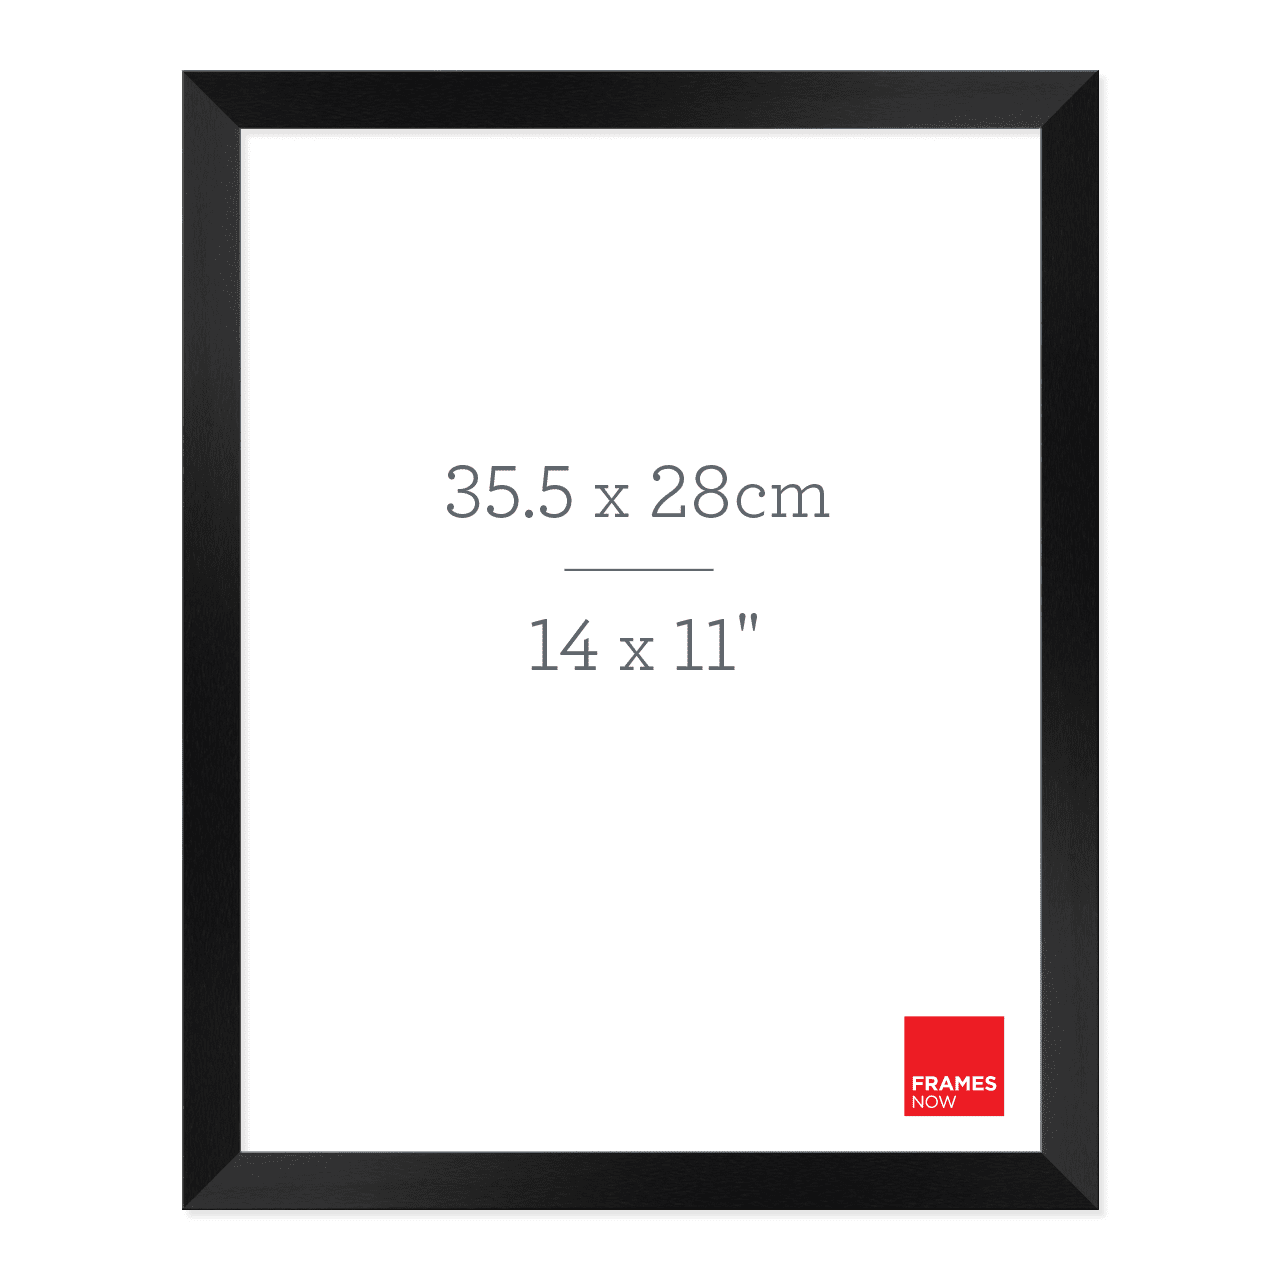 Premium Matte Black Box Picture Frame for 35.5 x 28cm Artwork